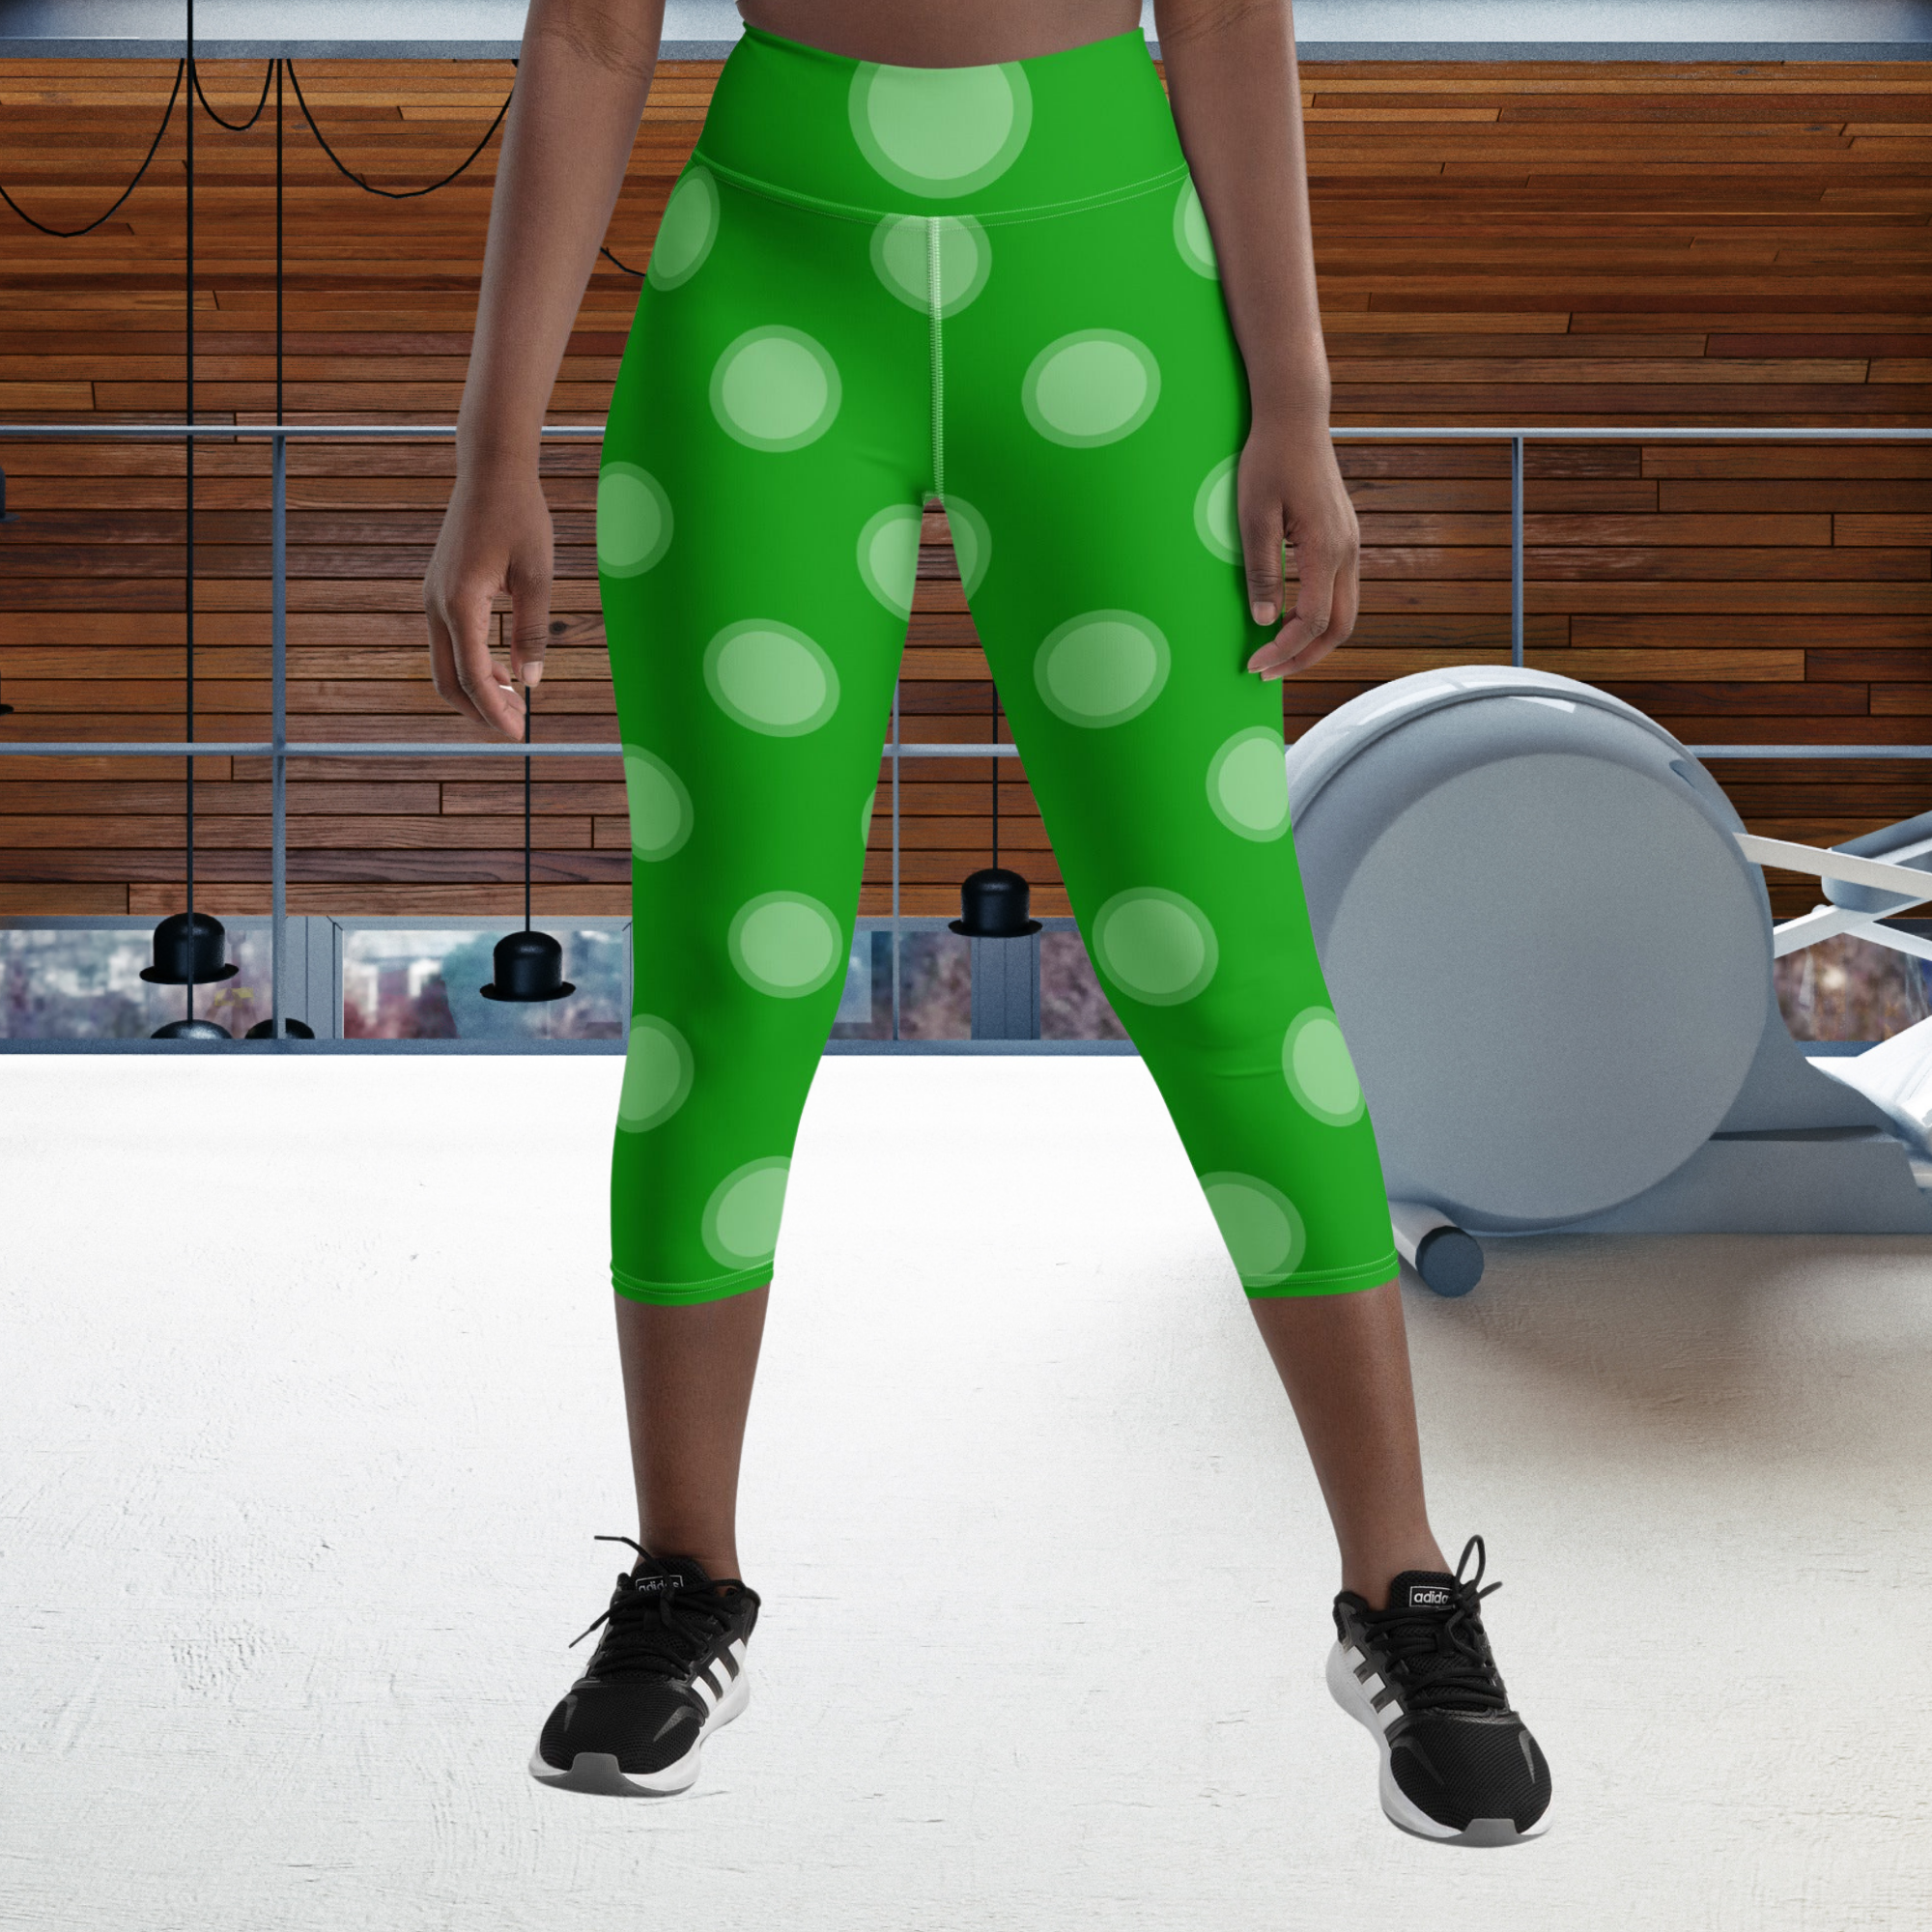 Green Polka Dots Yoga Capri Leggings | Fitness Capri Leggings, lioness-love